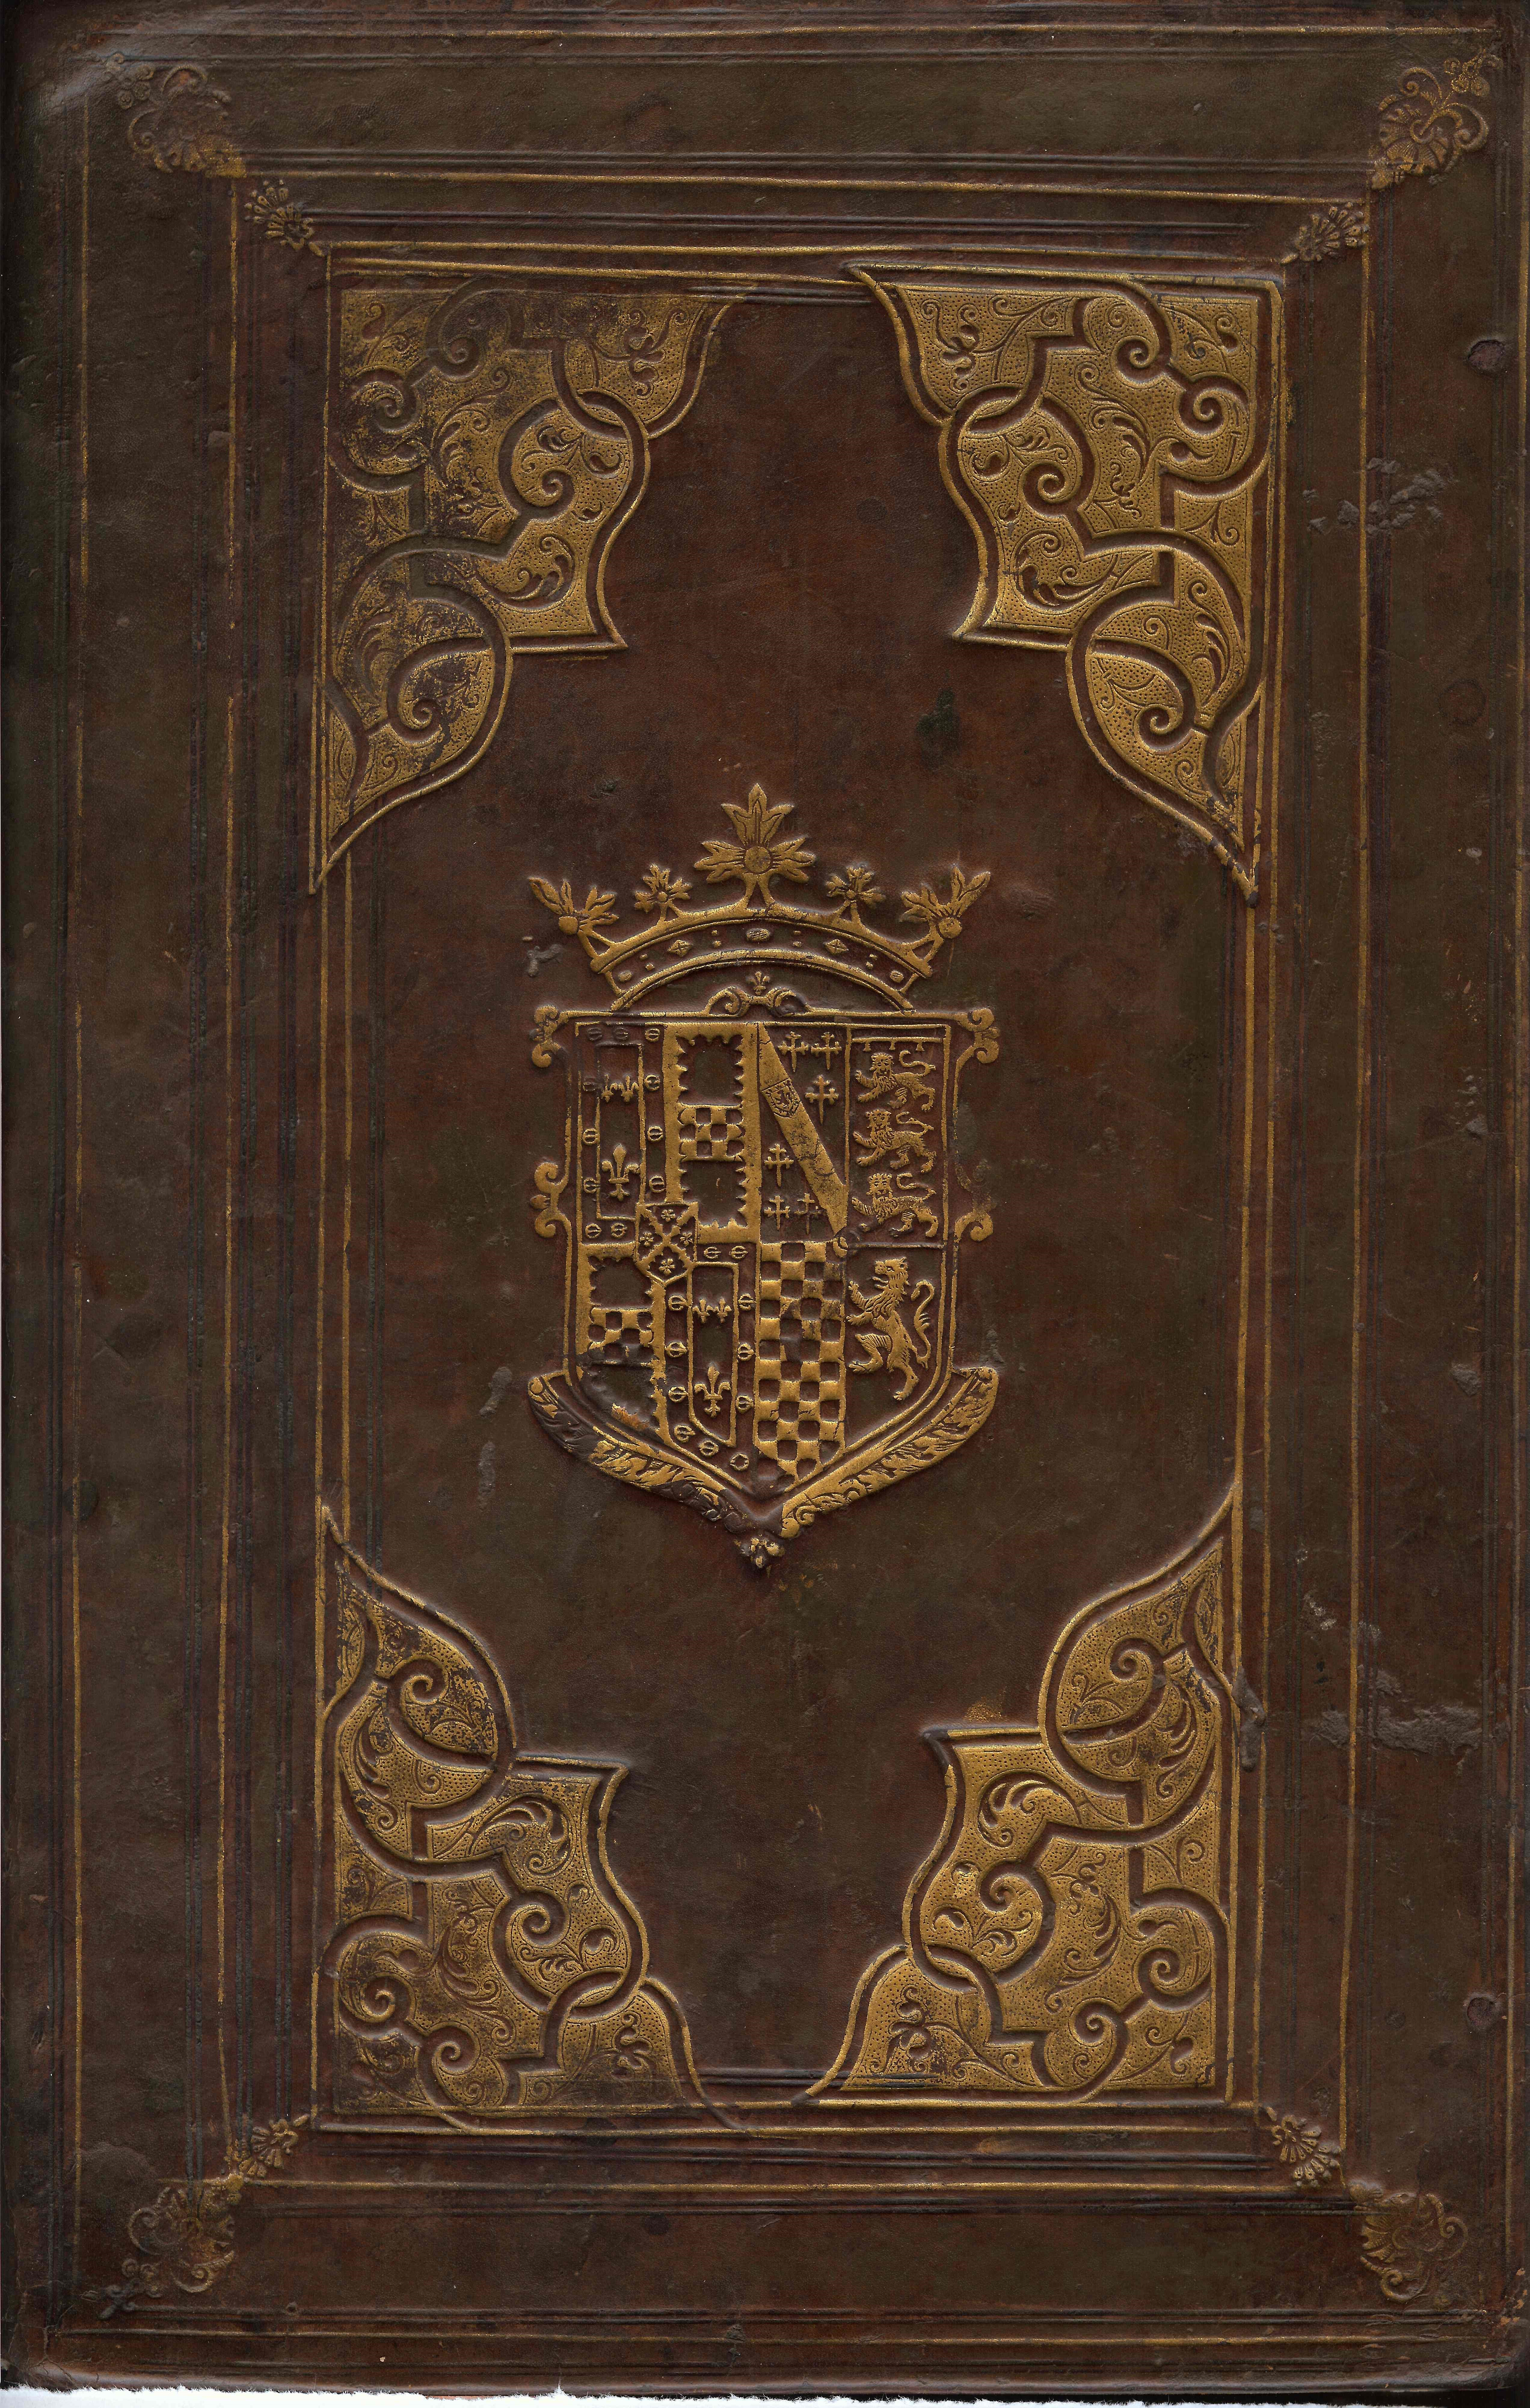 http://blogs.princeton.edu/rarebooks/images/1624_Smith_Kane_c3_recto.JPG